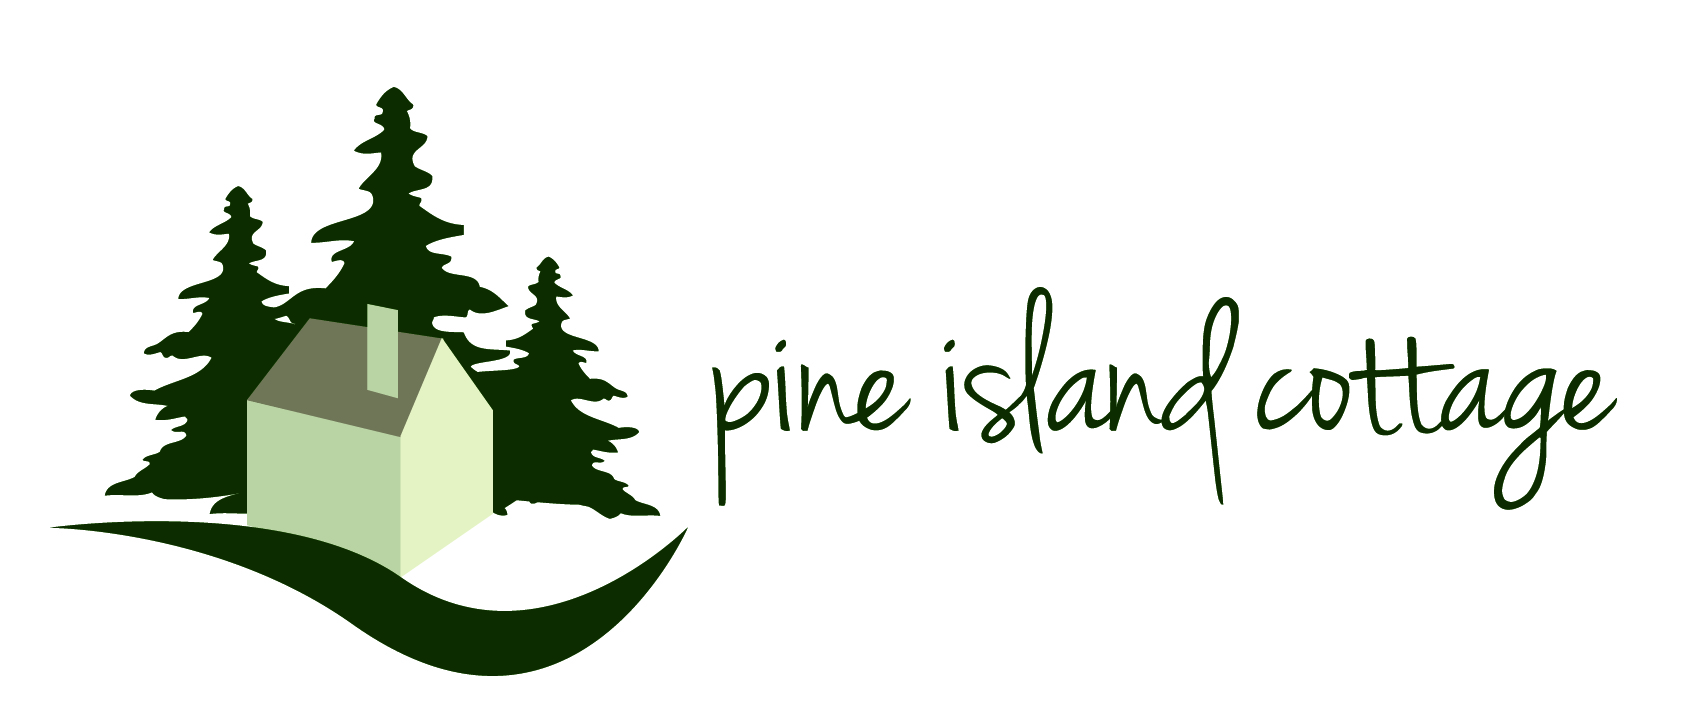 pine island cottage